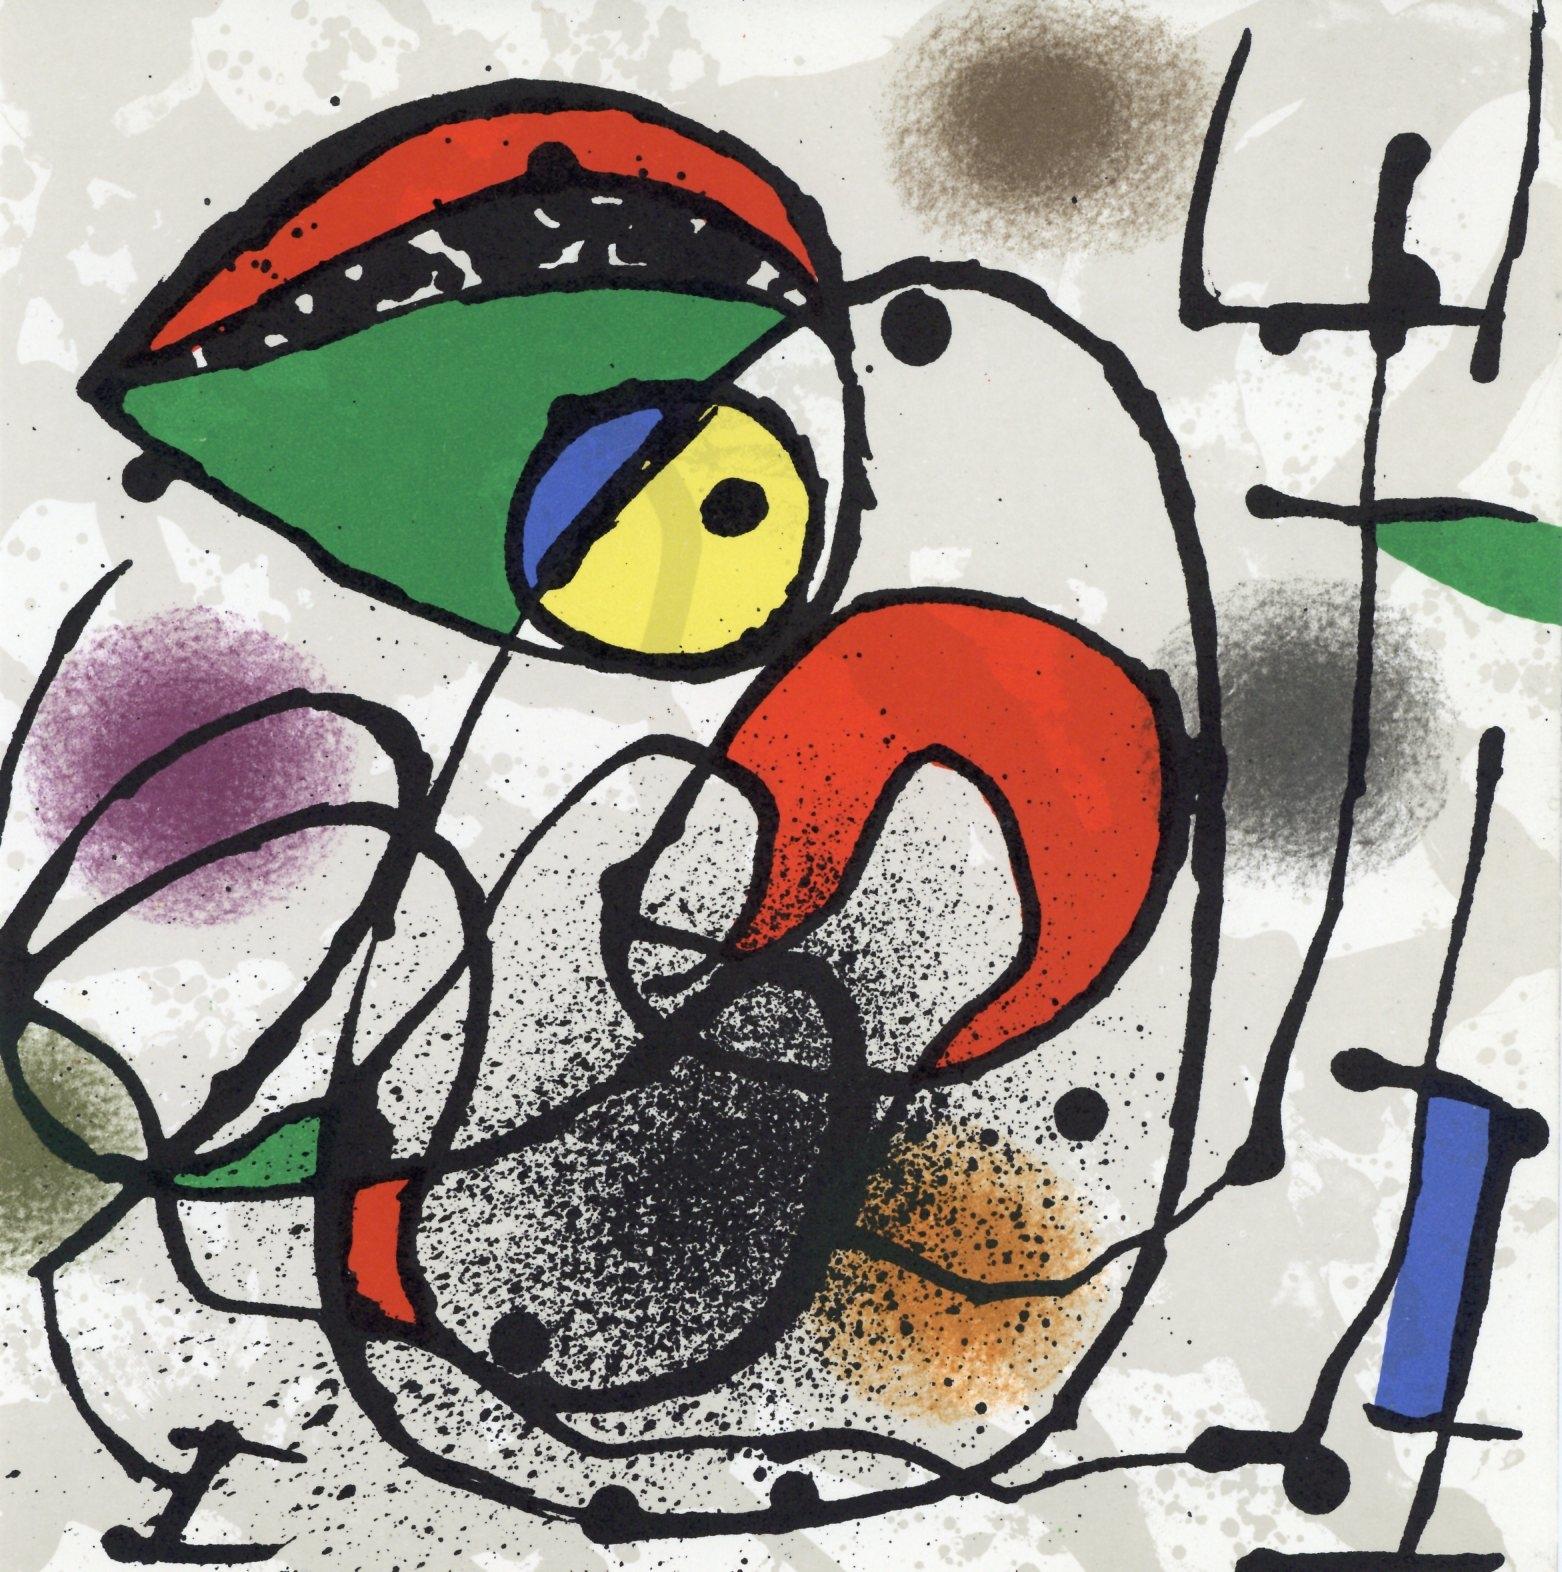 "Ceramiques" original lithograph - Print by Joan Miró